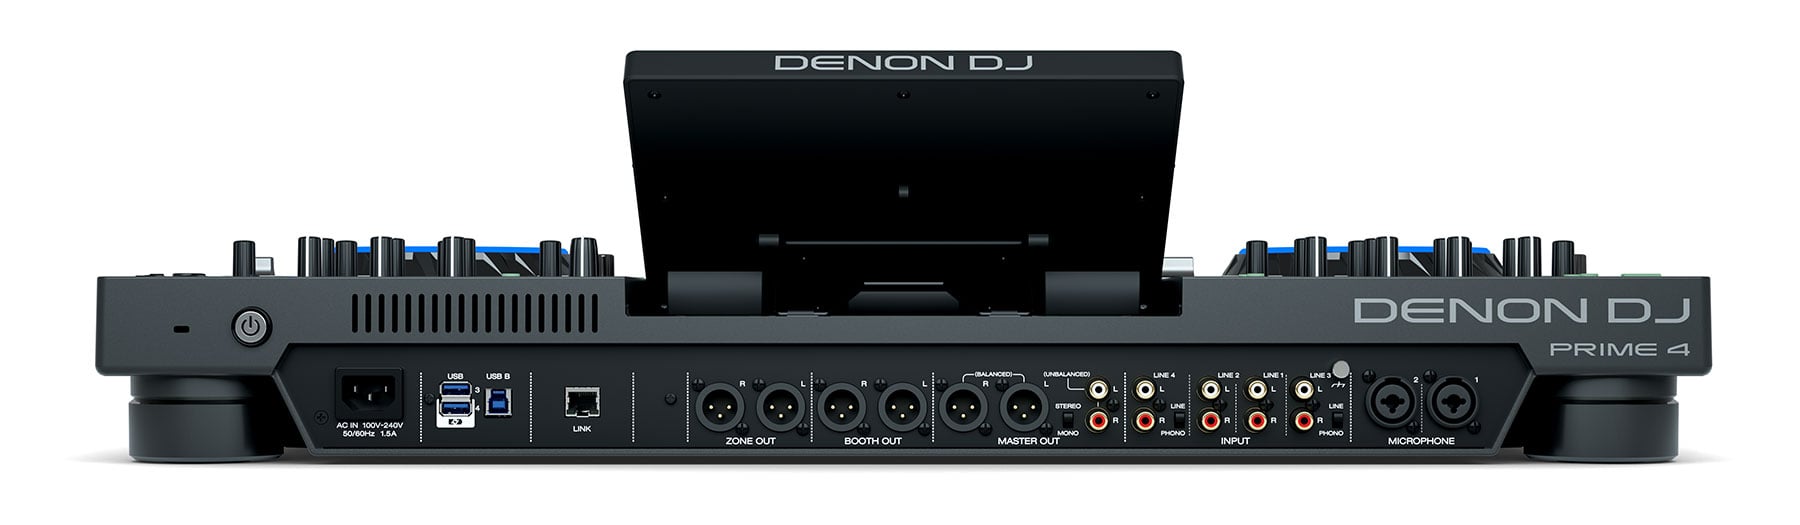 Denon DJ Prime 4 Connection